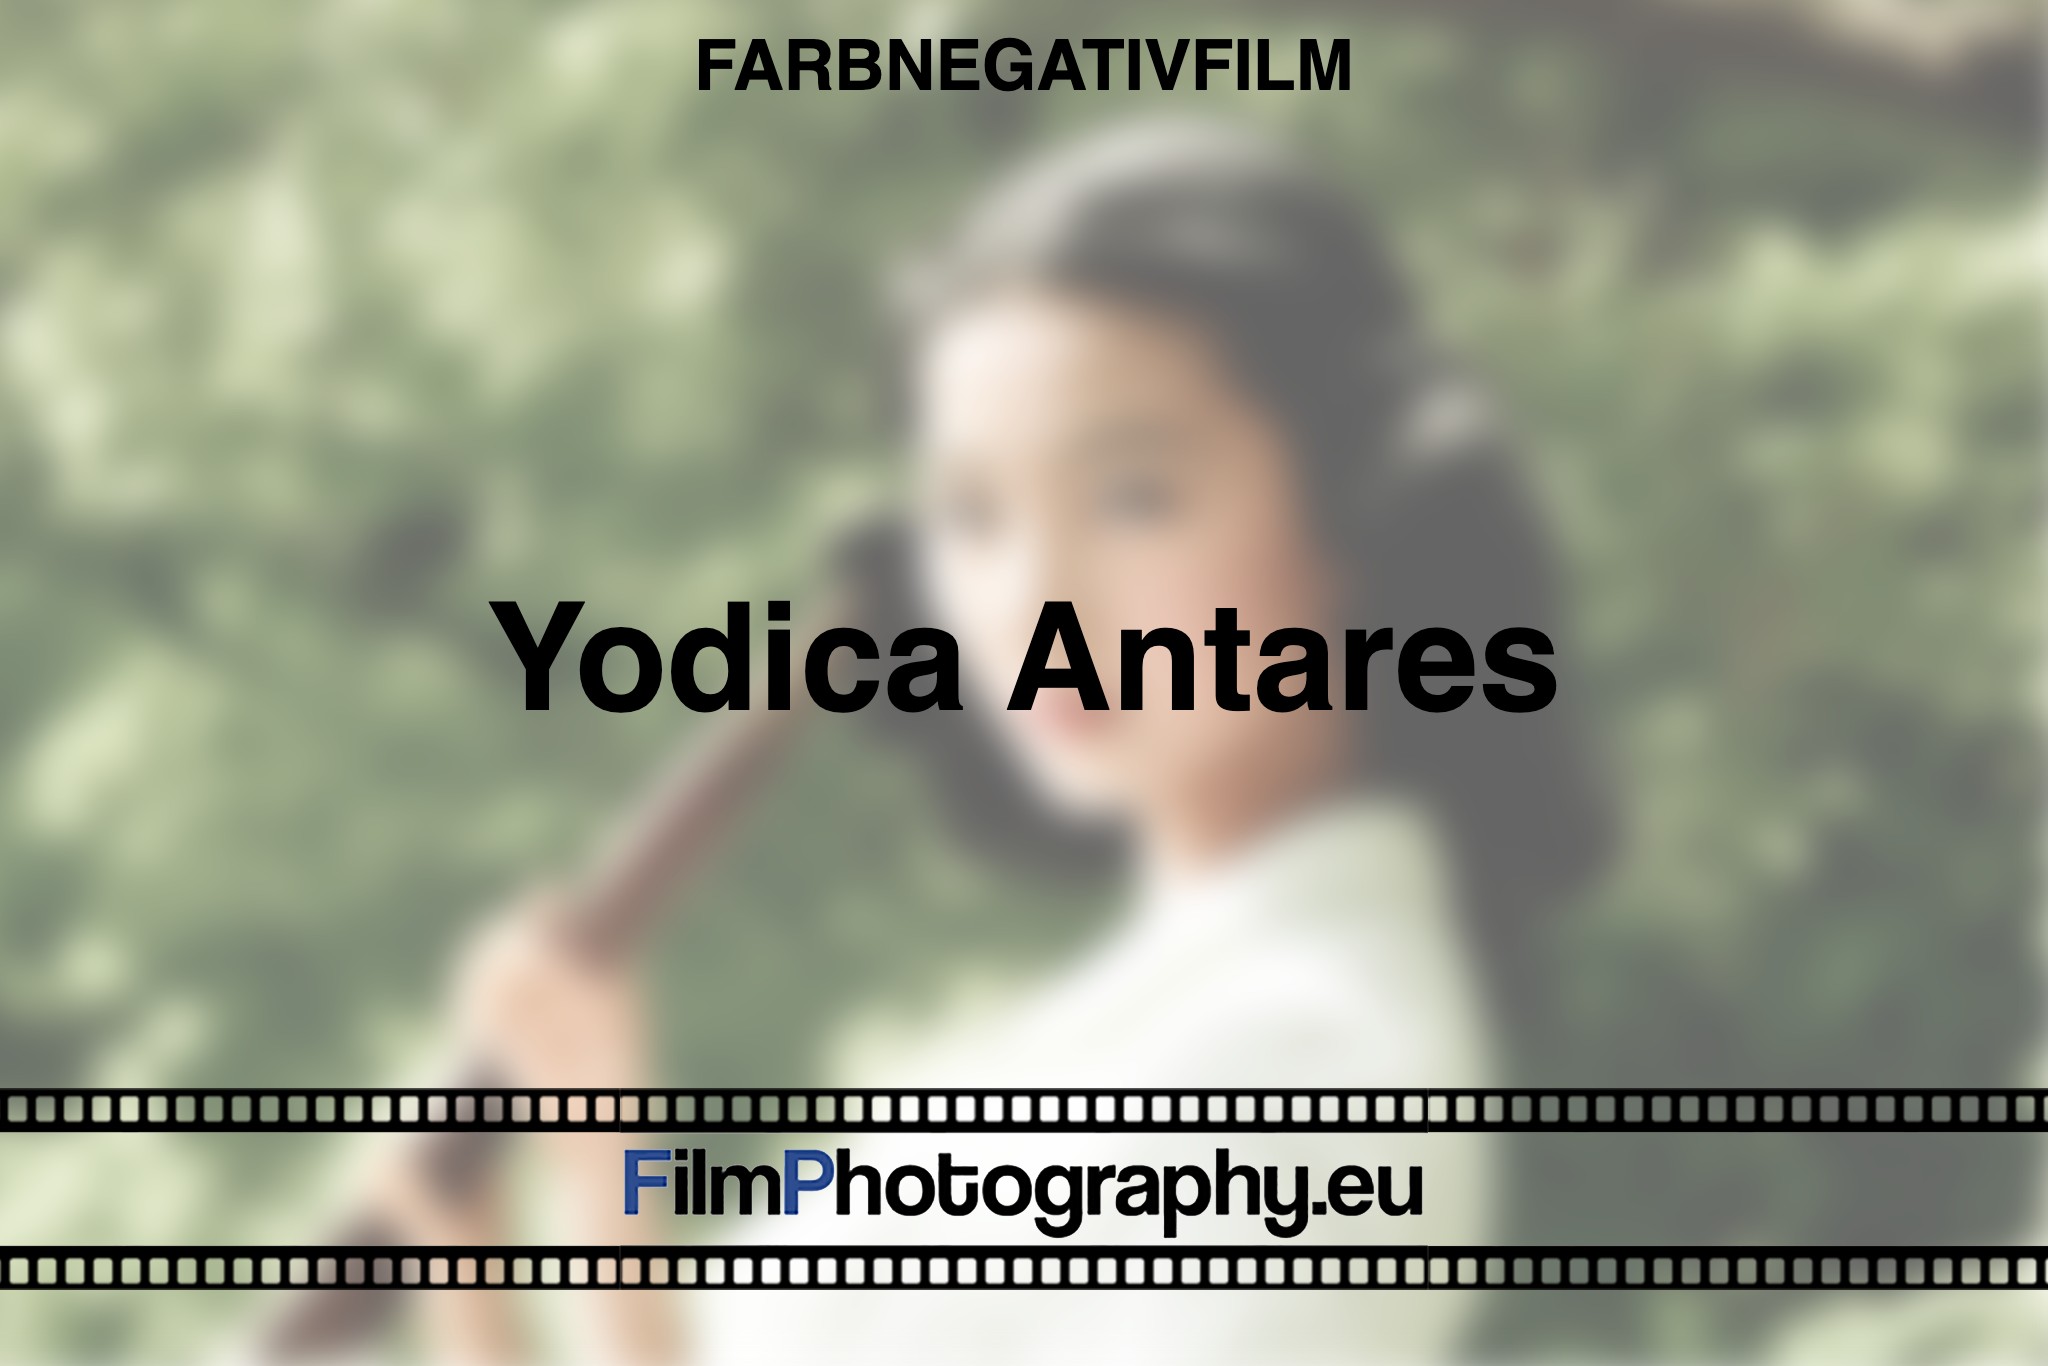 yodica-antares-farbnegativfilm-bnv